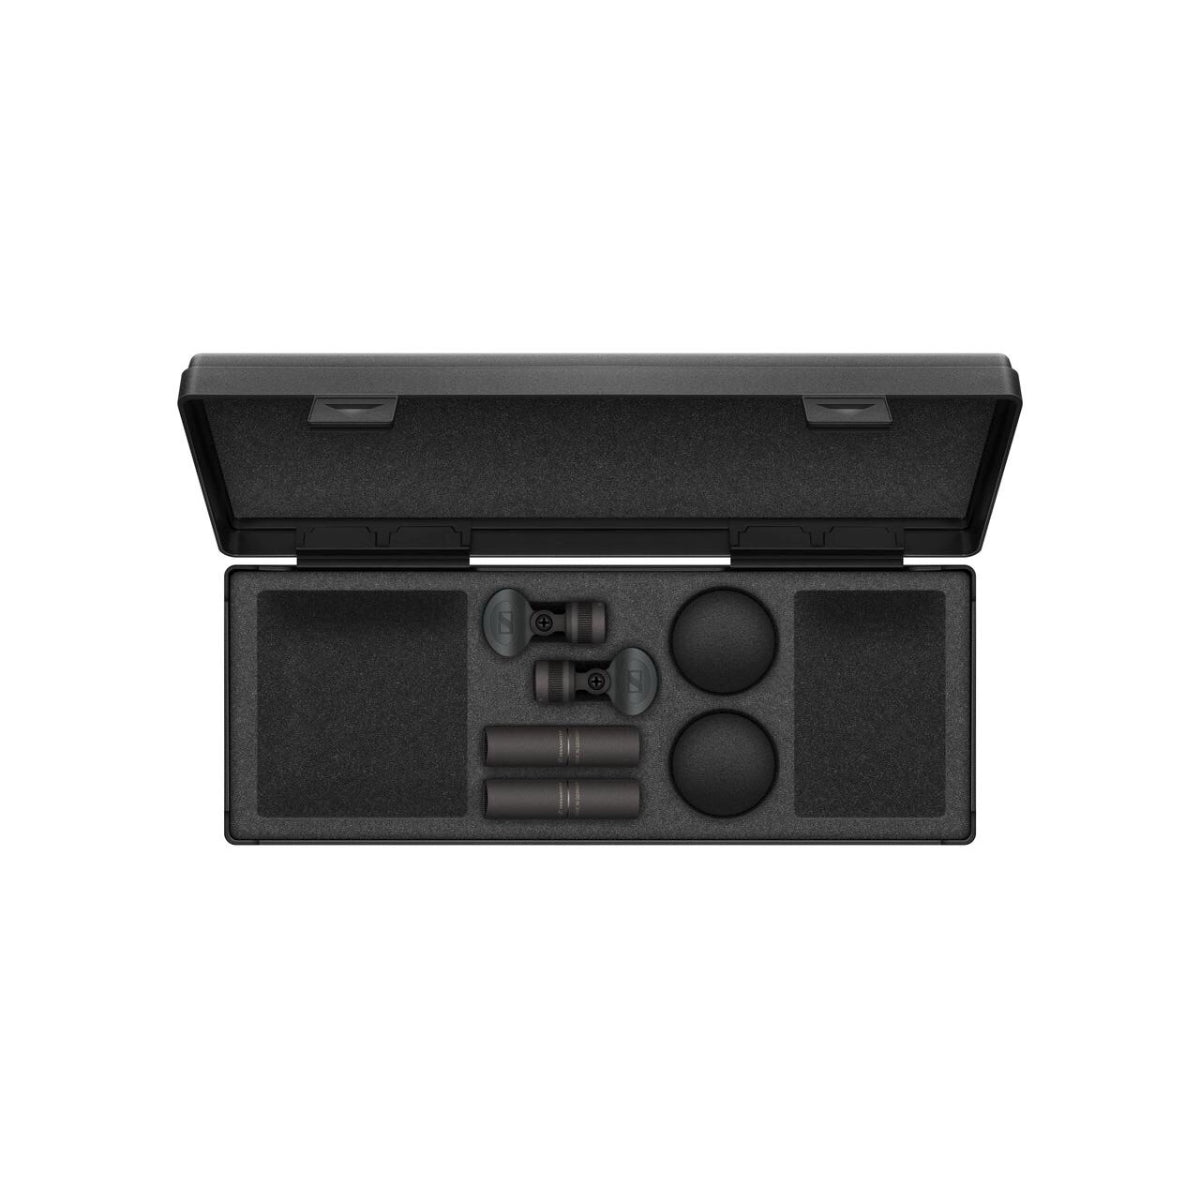 Sennheiser MKH 8020 Stereoset Redesign 2x Condenser Omni-directional Microphone, 2 XLR Module, Black